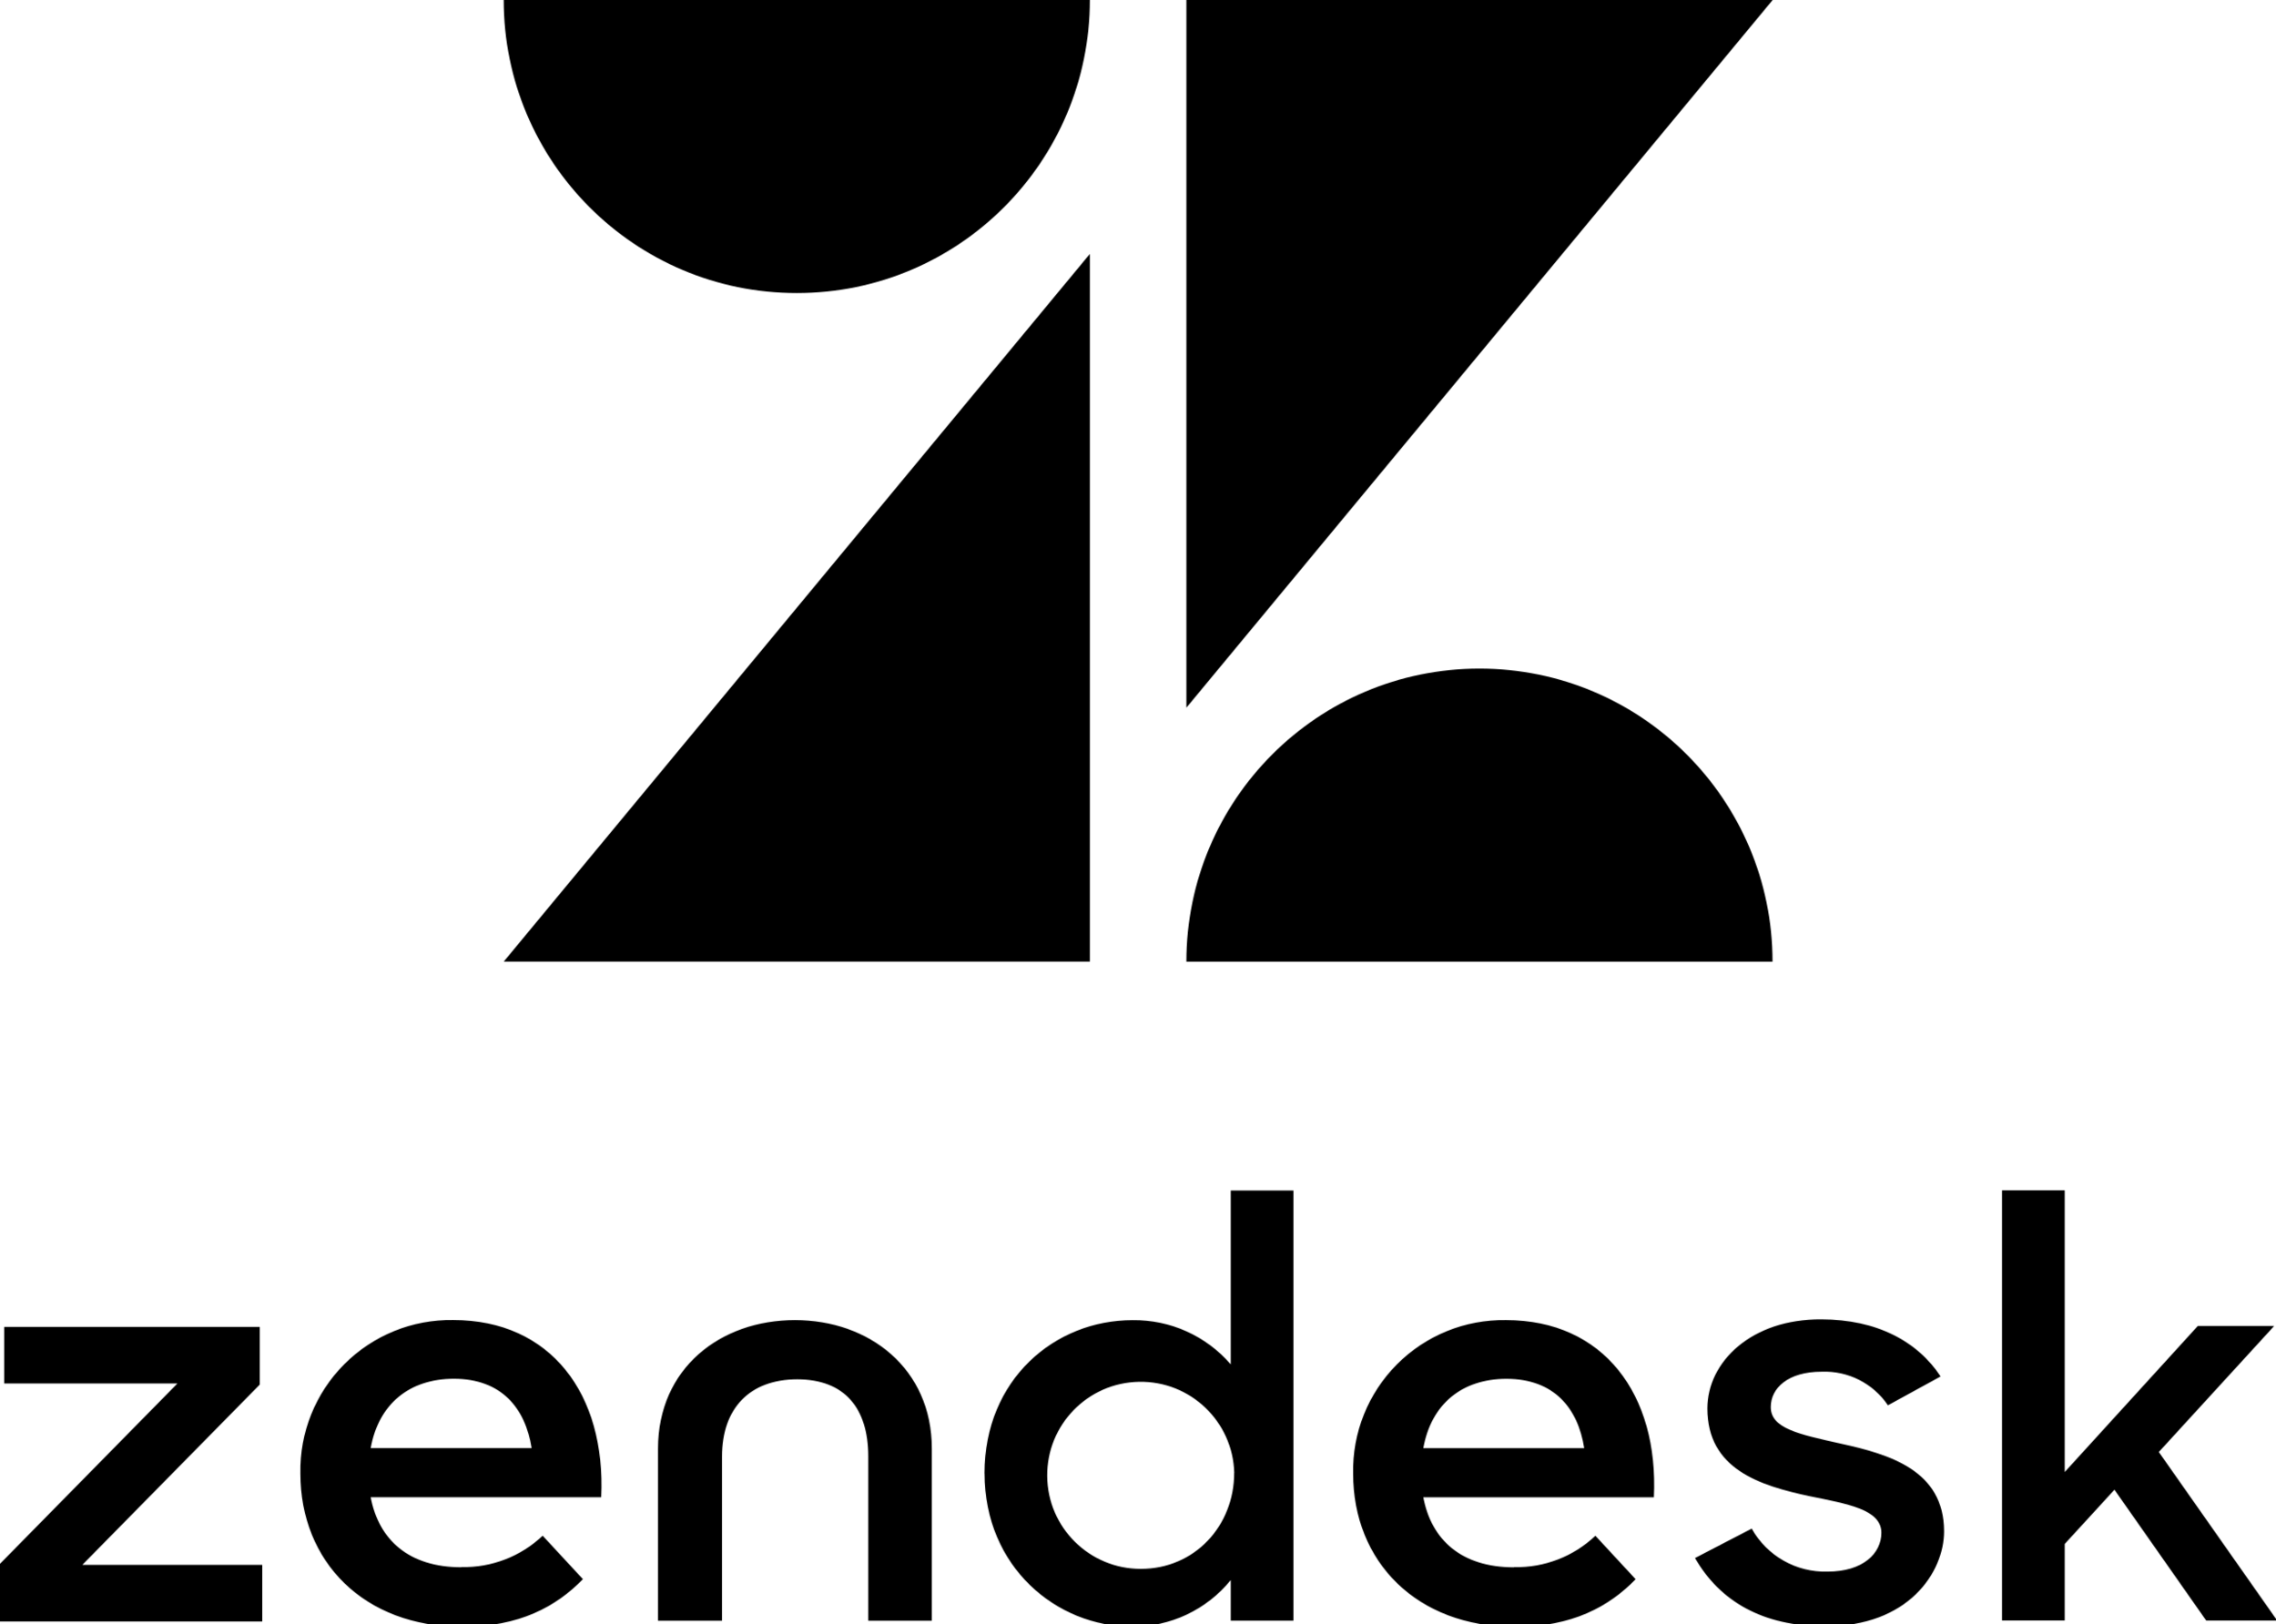 2560px-Zendesk_logo.png